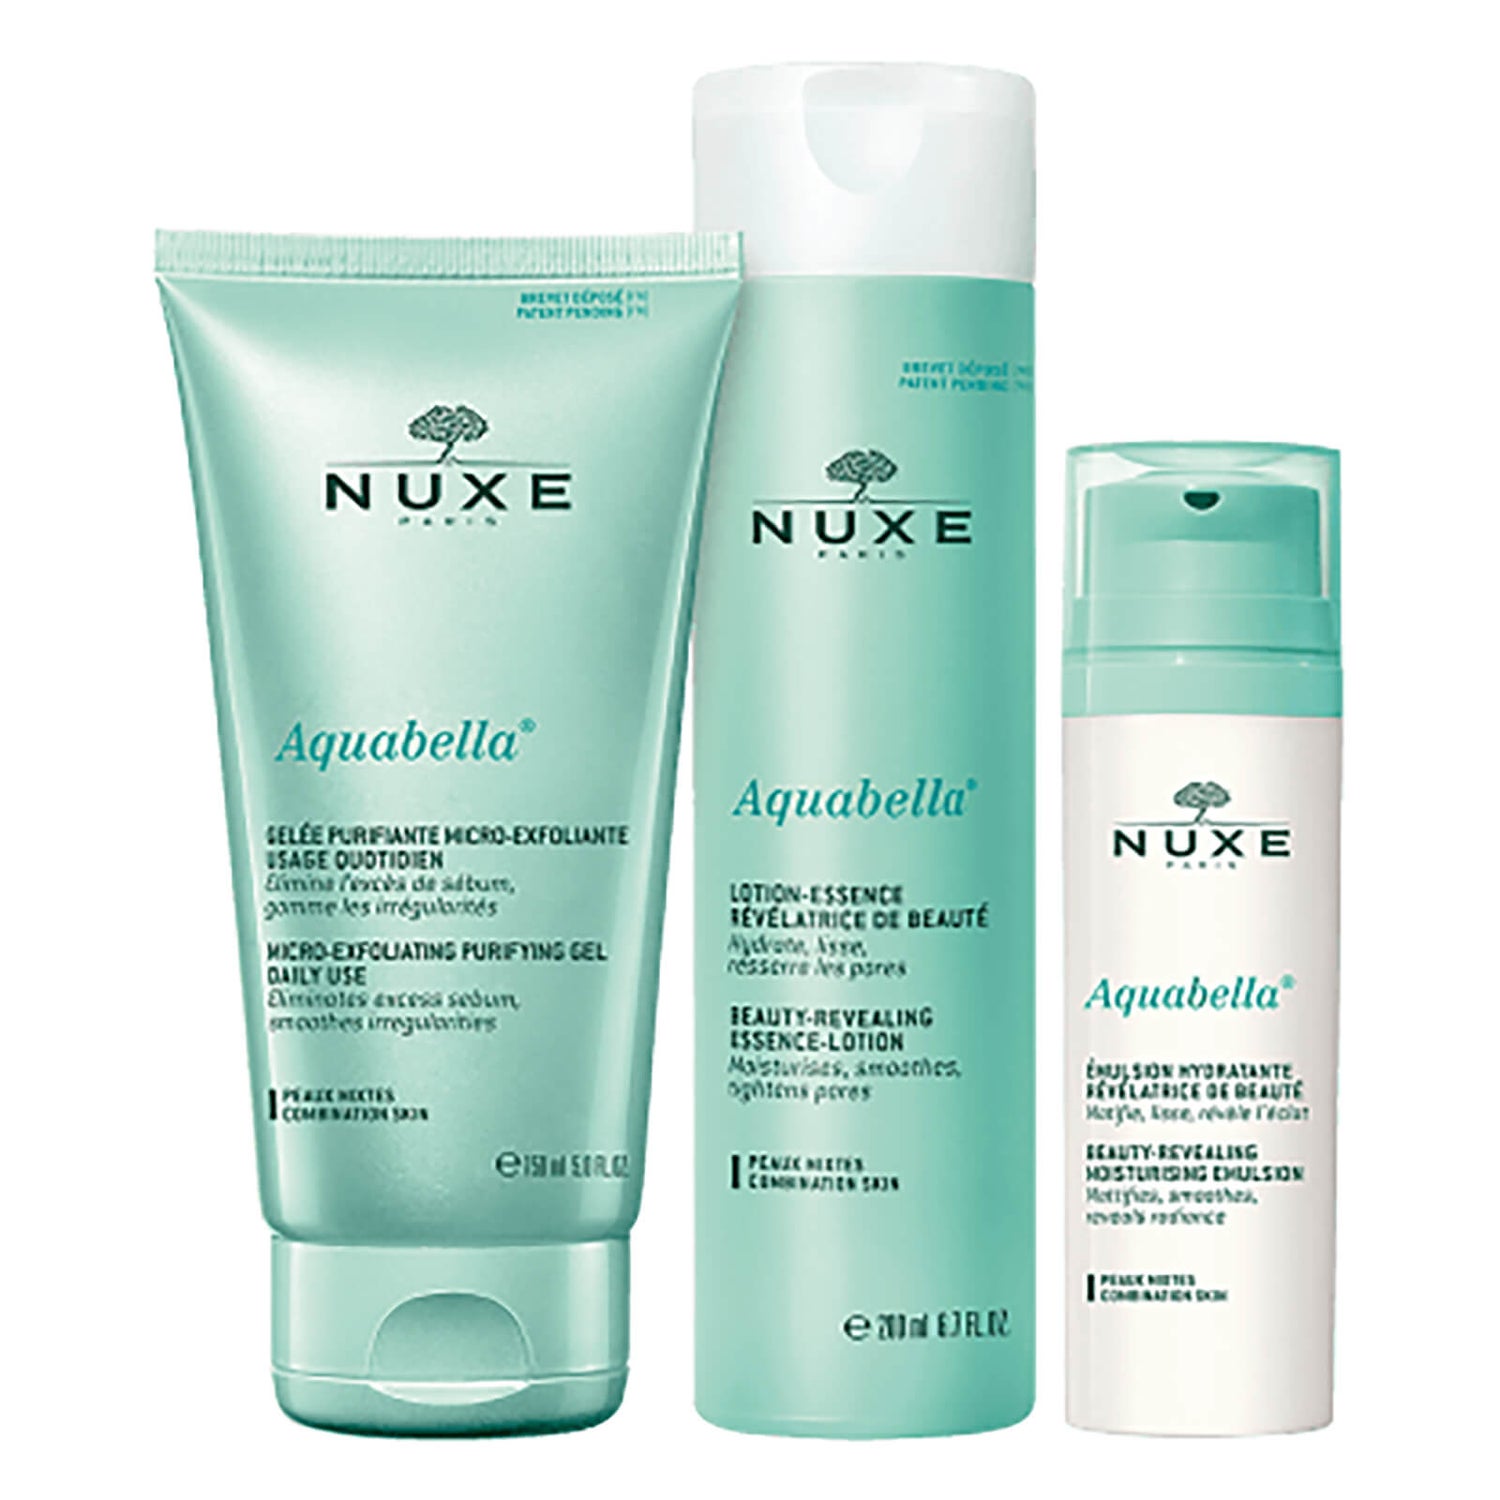 NUXE Aquabella My Beauty-Revealing Set (Worth $66)